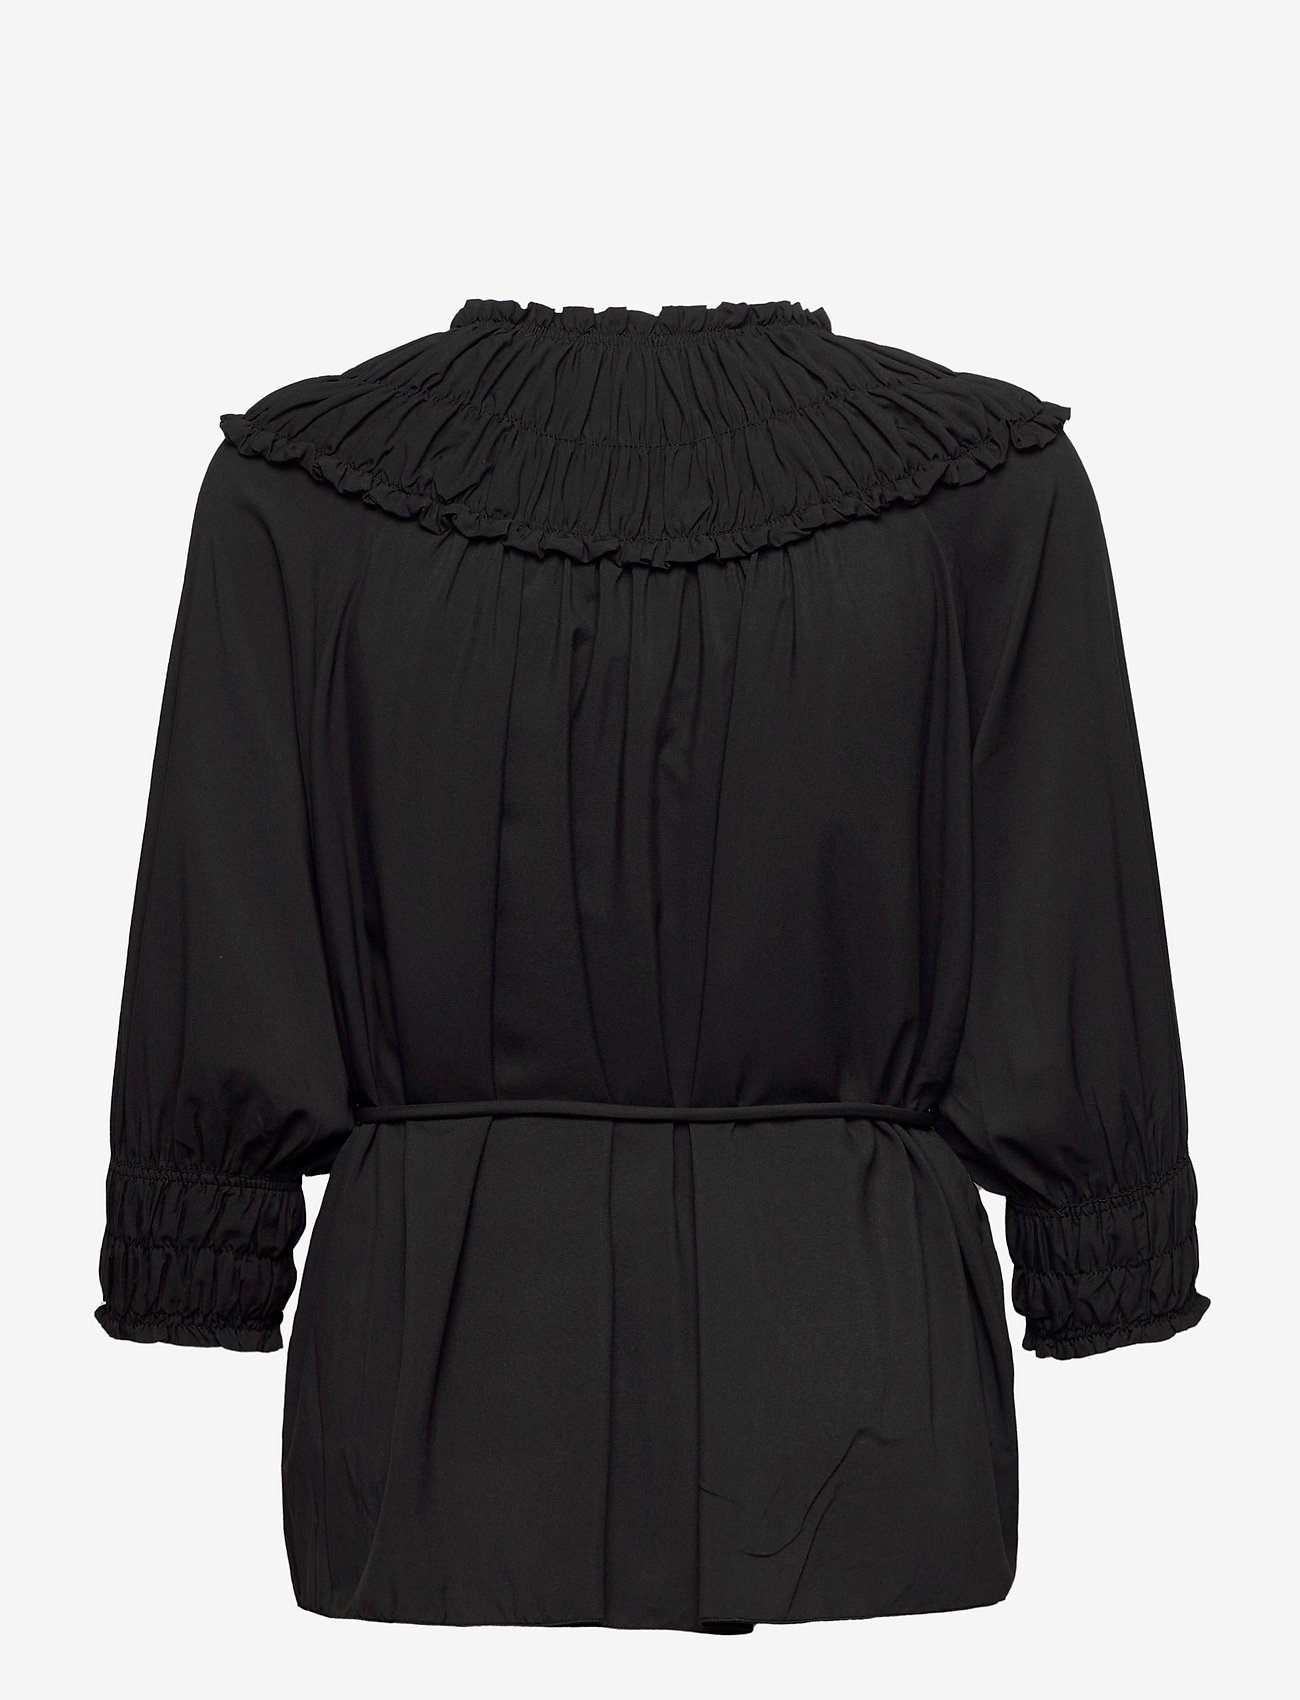 Cathrine Hammel - Gathered neckline top - blouses à manches longues - black - 1